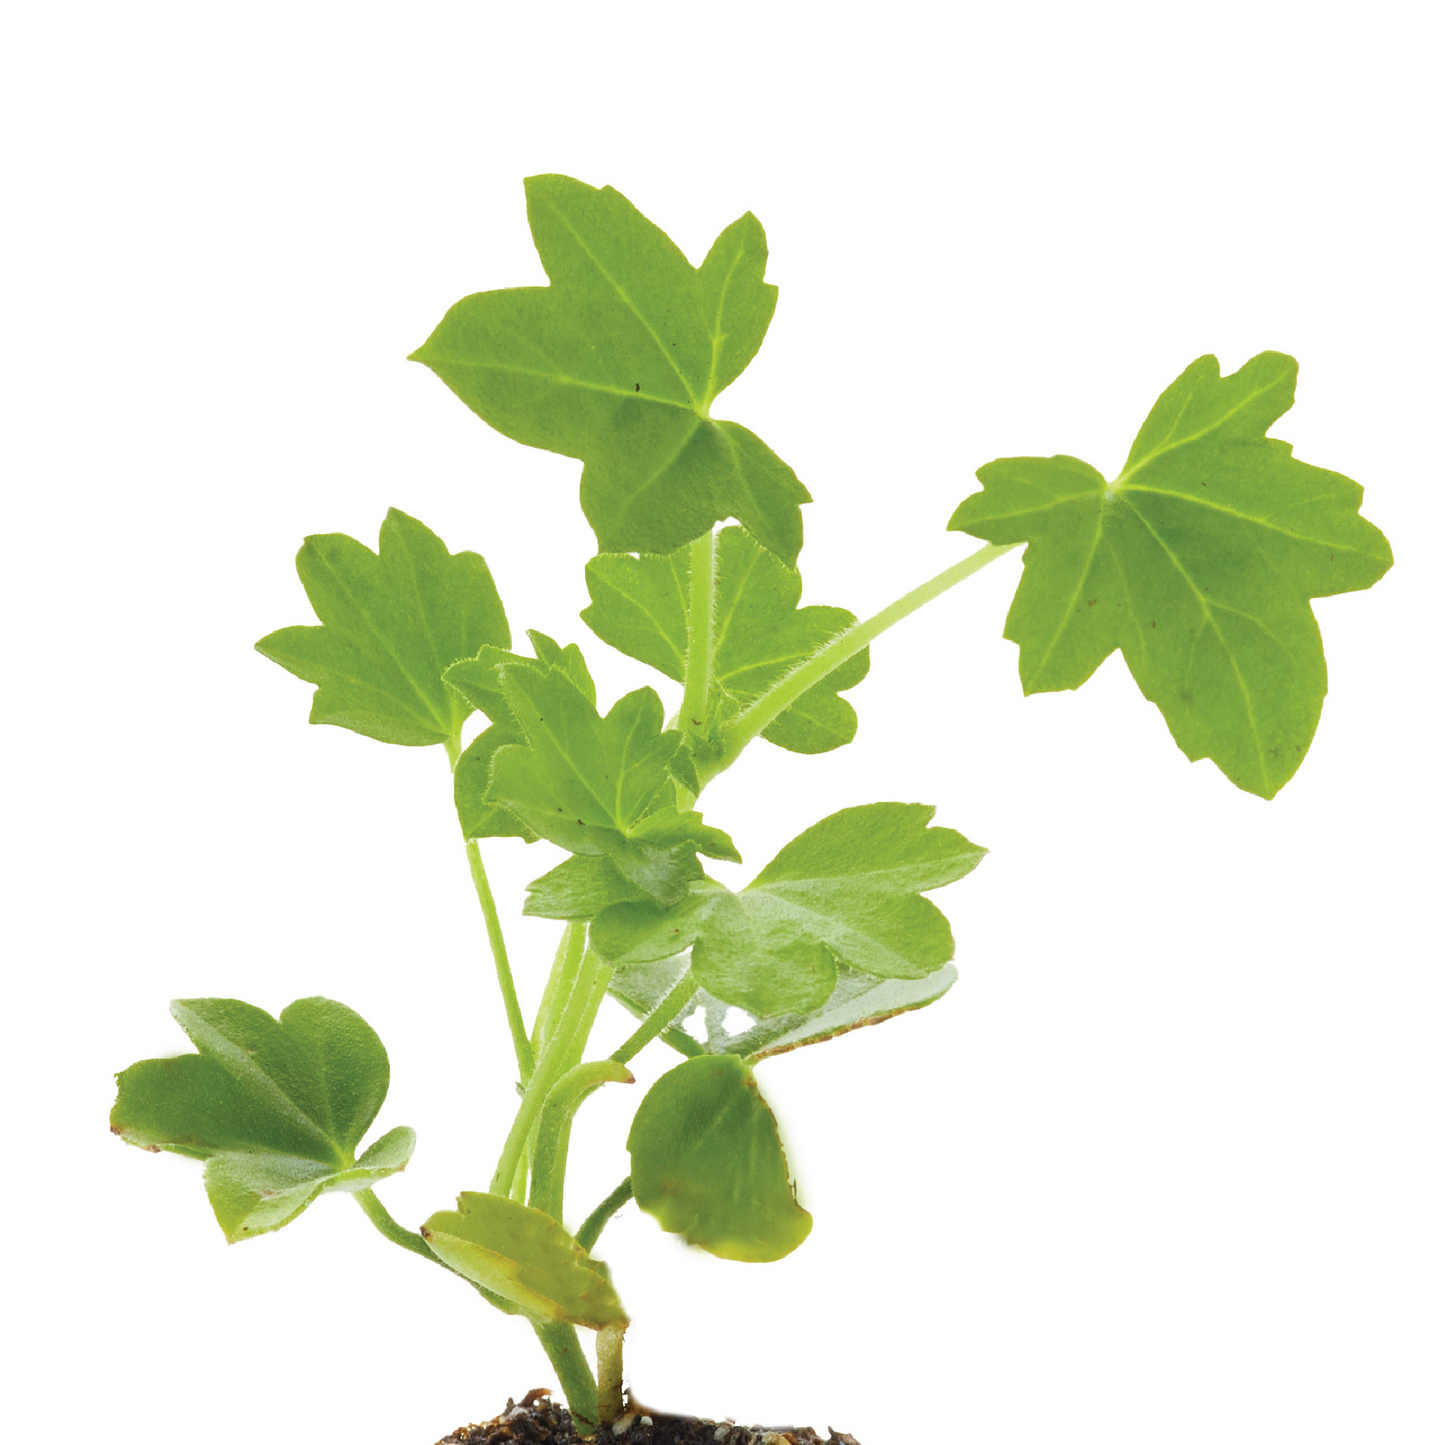 Geranium Ivy Precision Dark Burgundy Plantlings Live Baby Plants 1-3in., 6-Pack